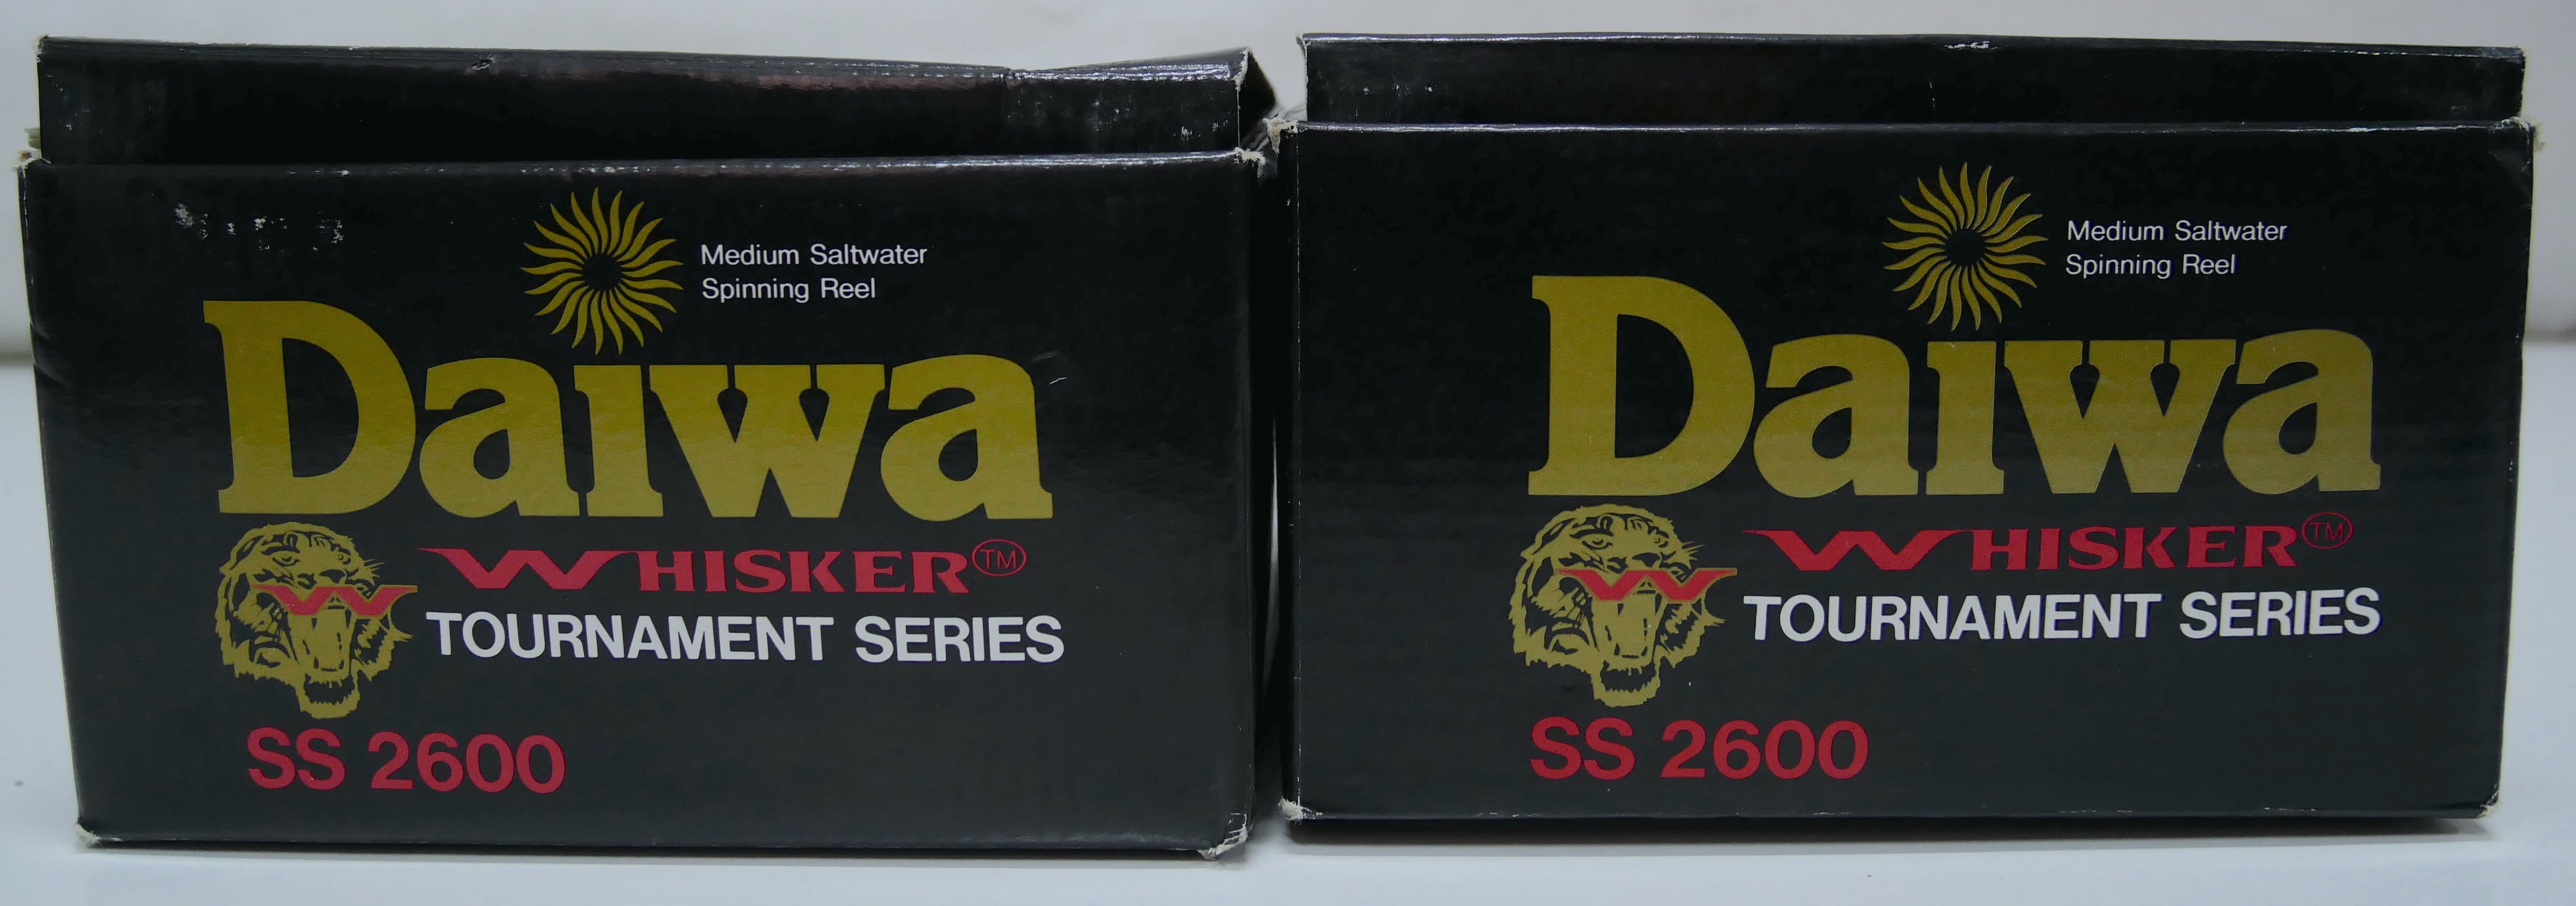 Daiwa Tournament Whisker SS 2600 Reels X2 + Weston Spools +